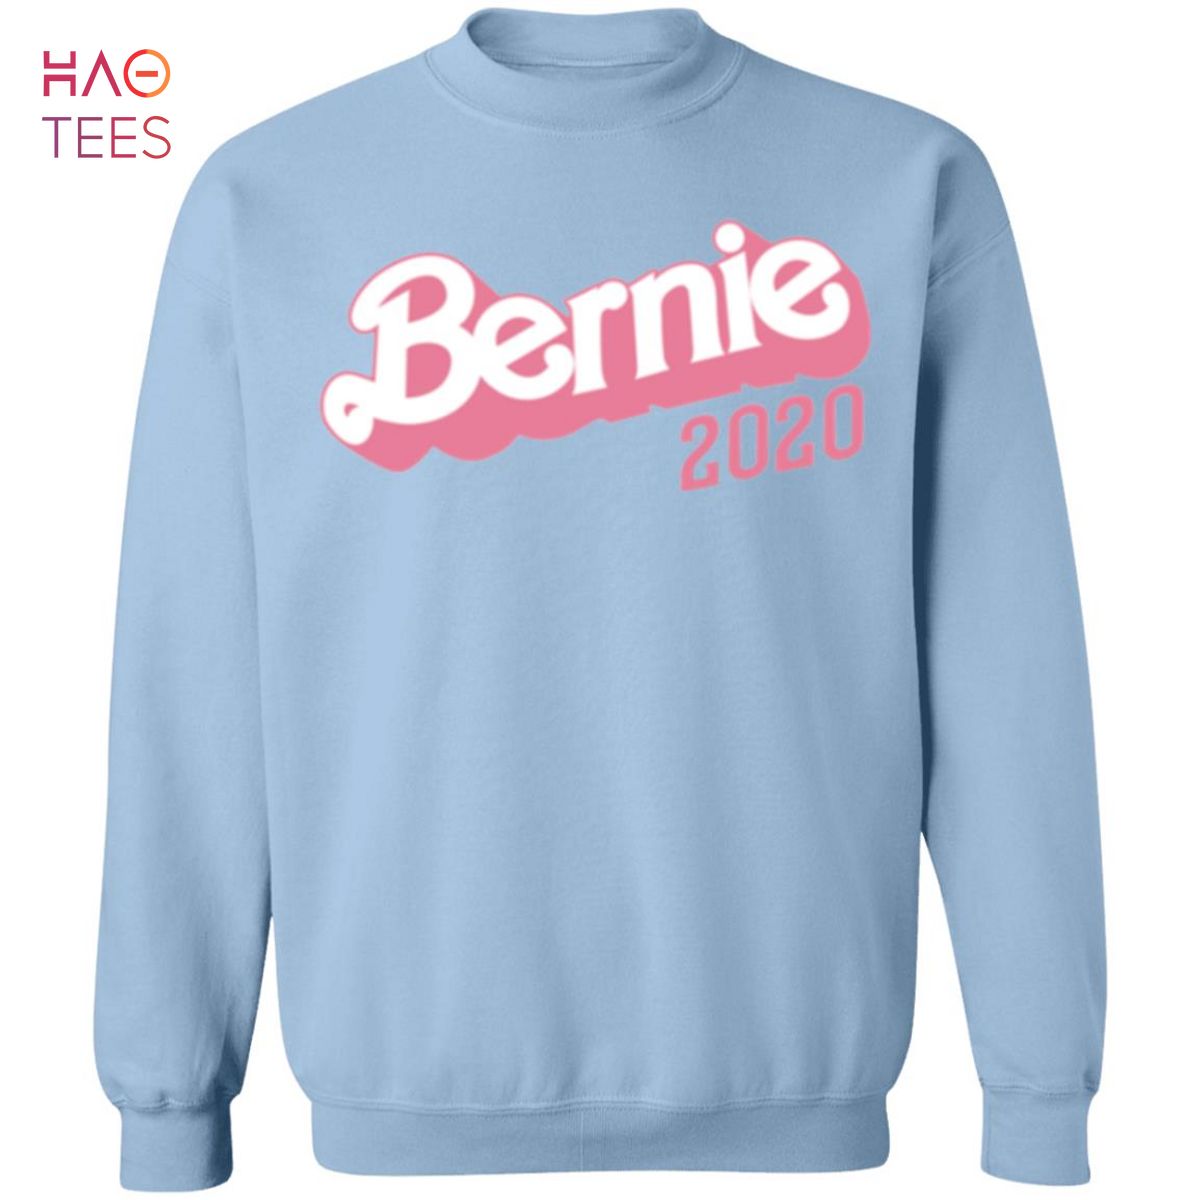 BEST Bernie Barbie Sweater